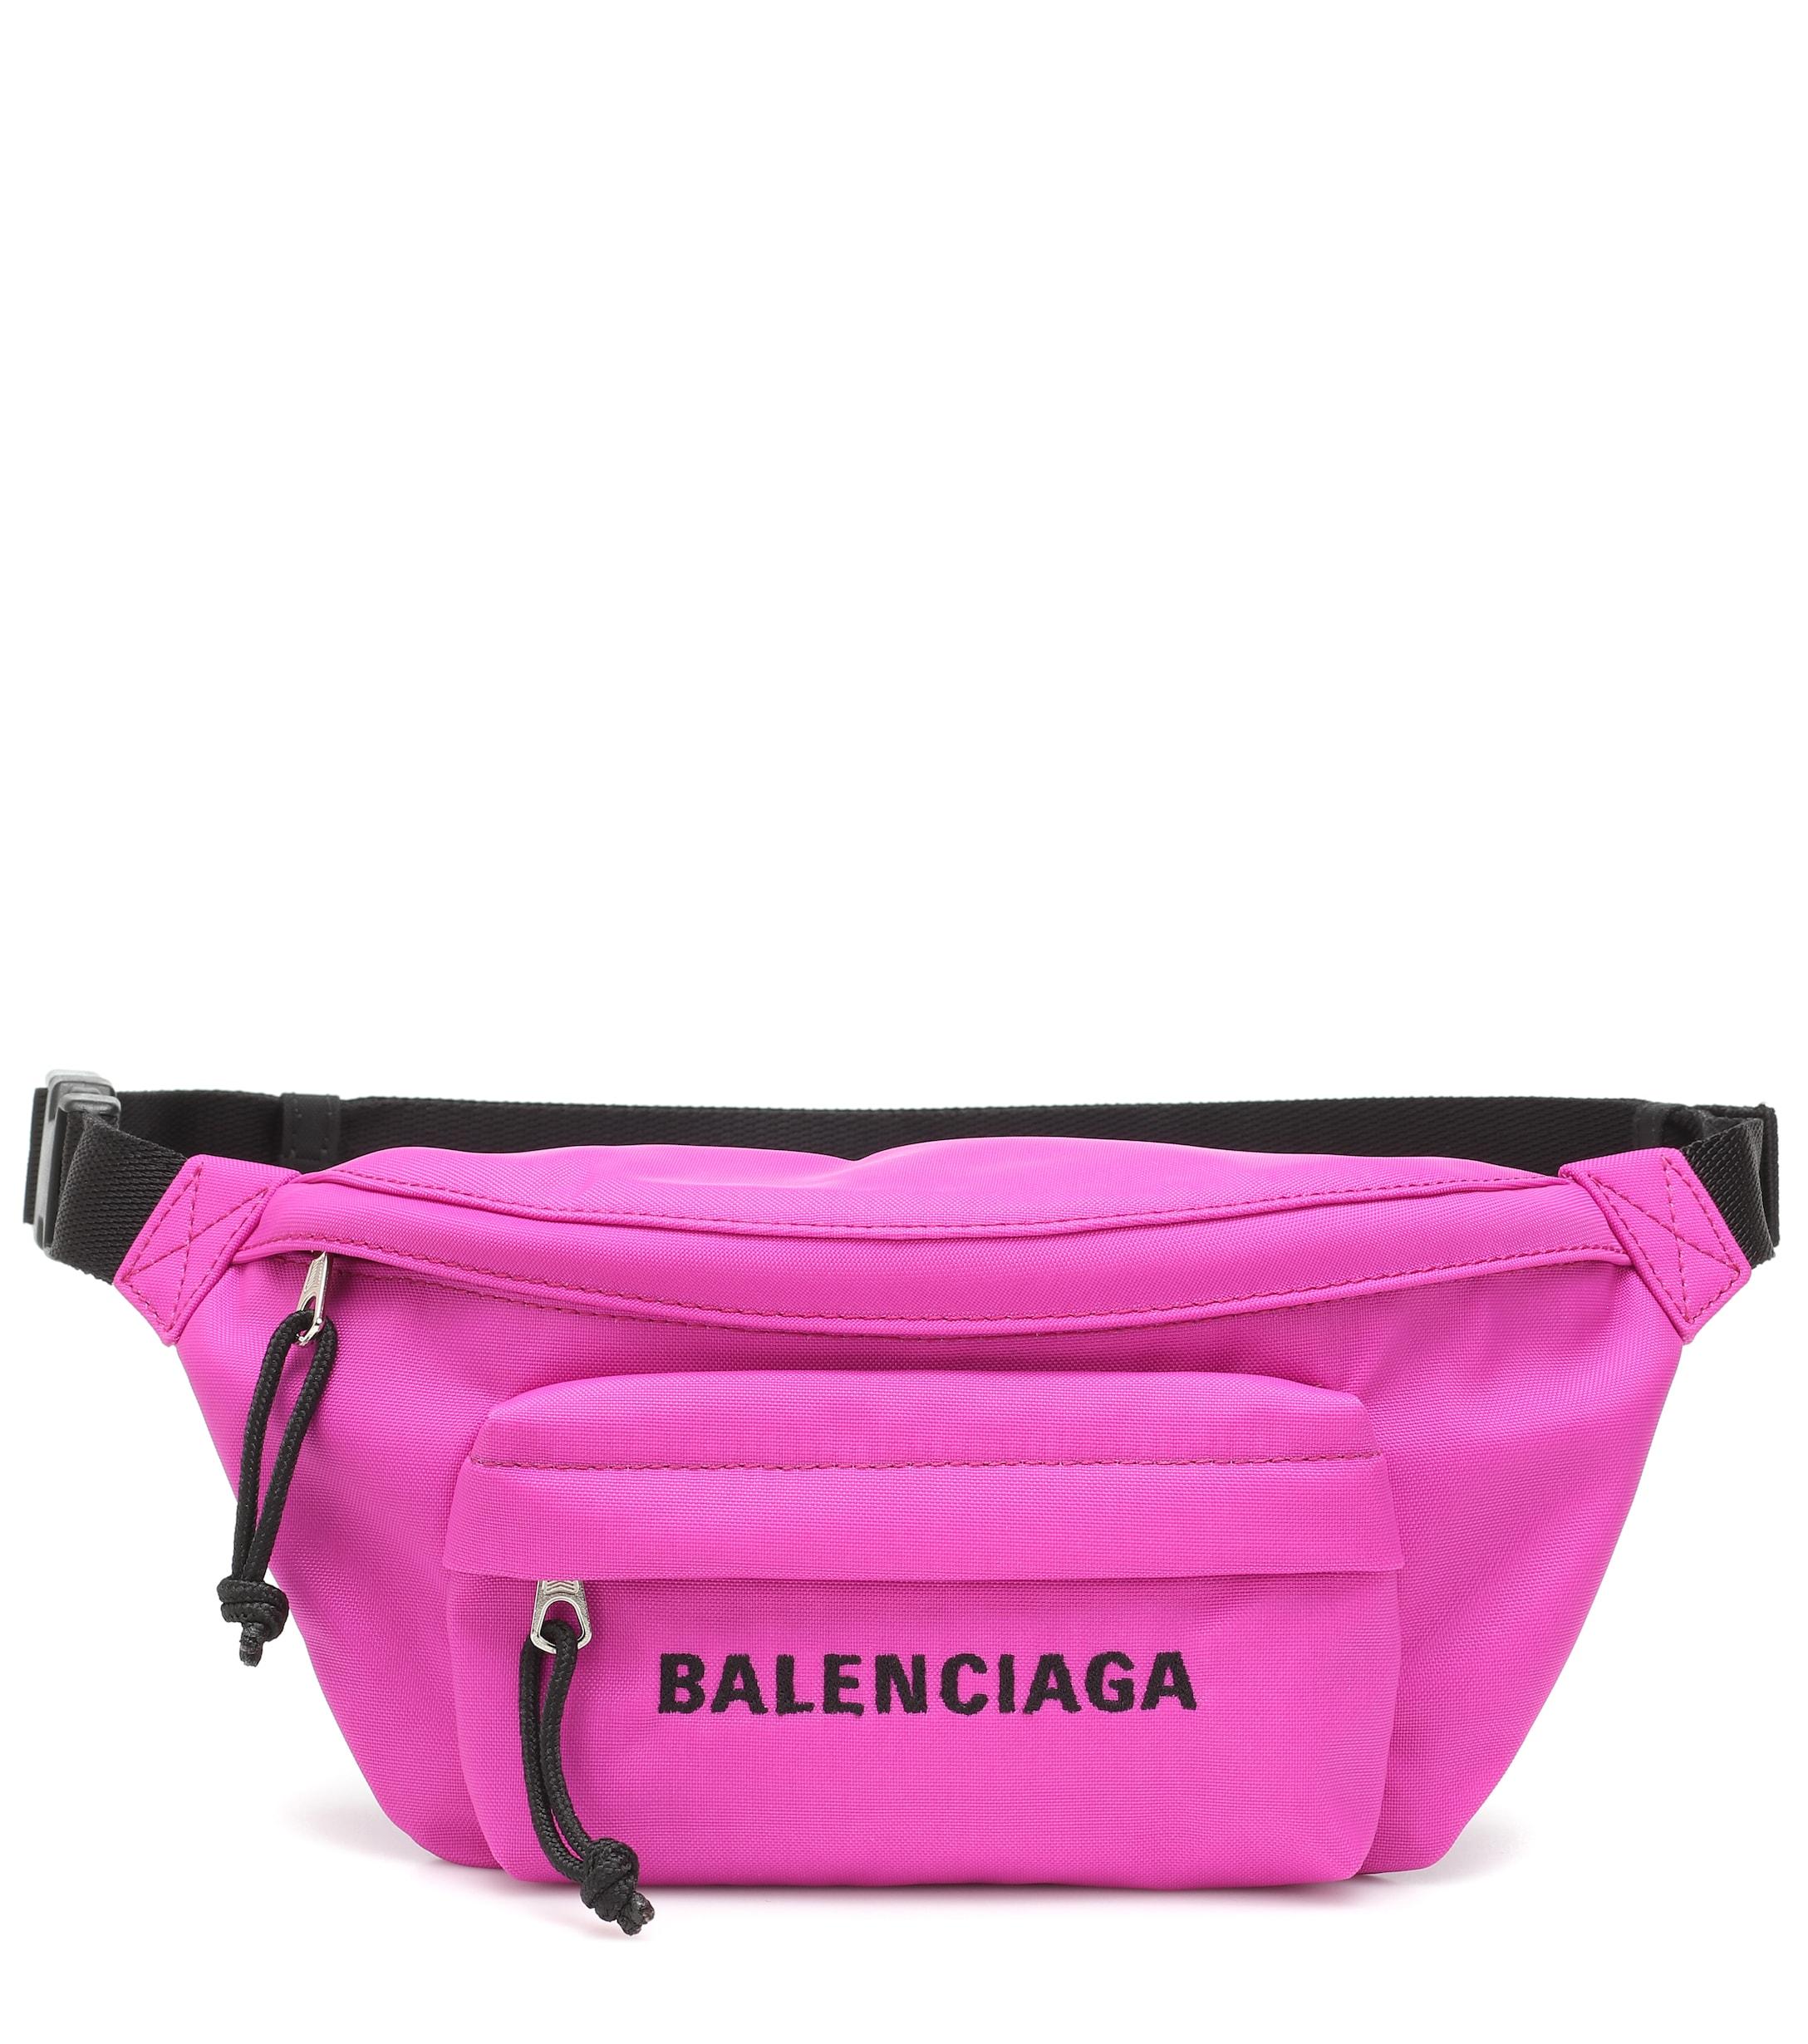 Balenciaga Wheel S Belt Bag in Fuchsia,Black (Pink) - Lyst